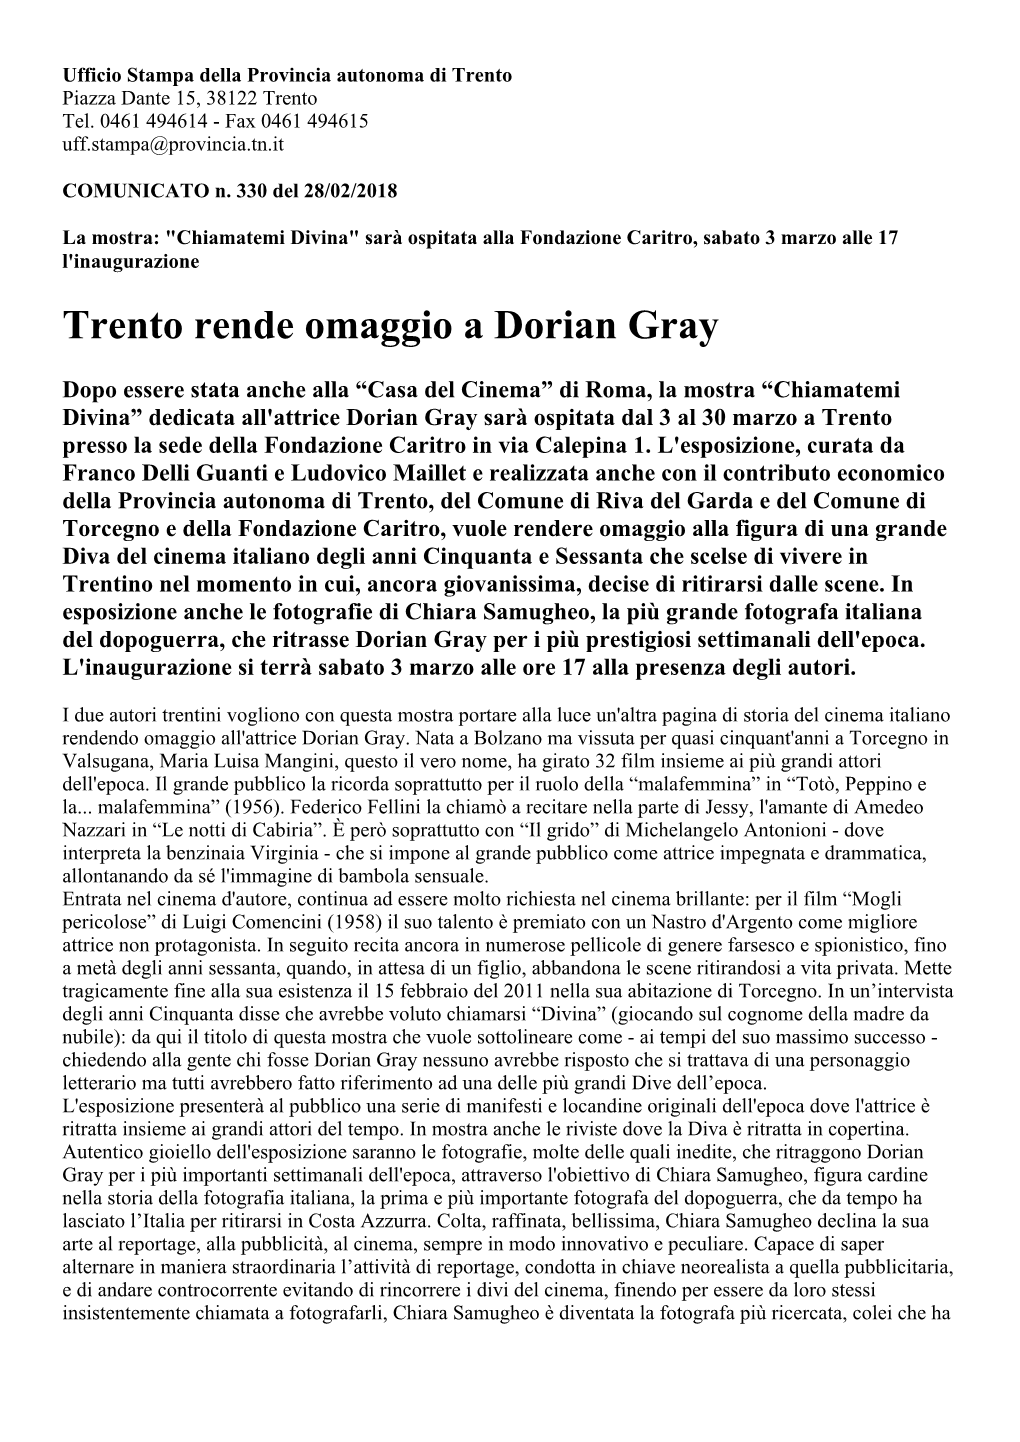 Trento Rende Omaggio a Dorian Gray